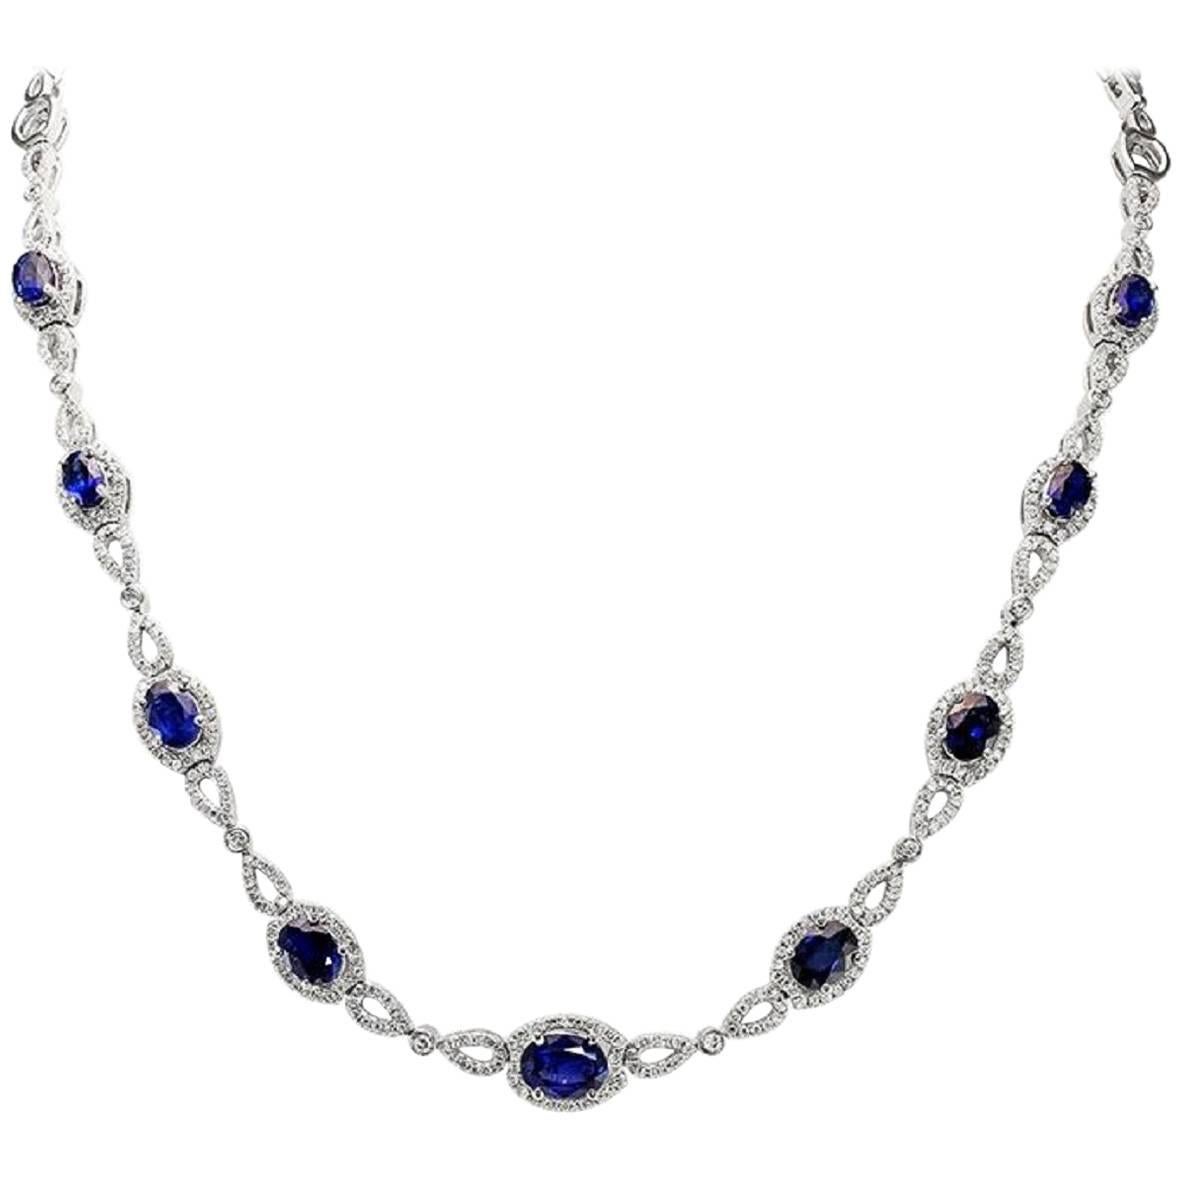 Oval Sapphire and Diamond Necklace 7.45 Carat